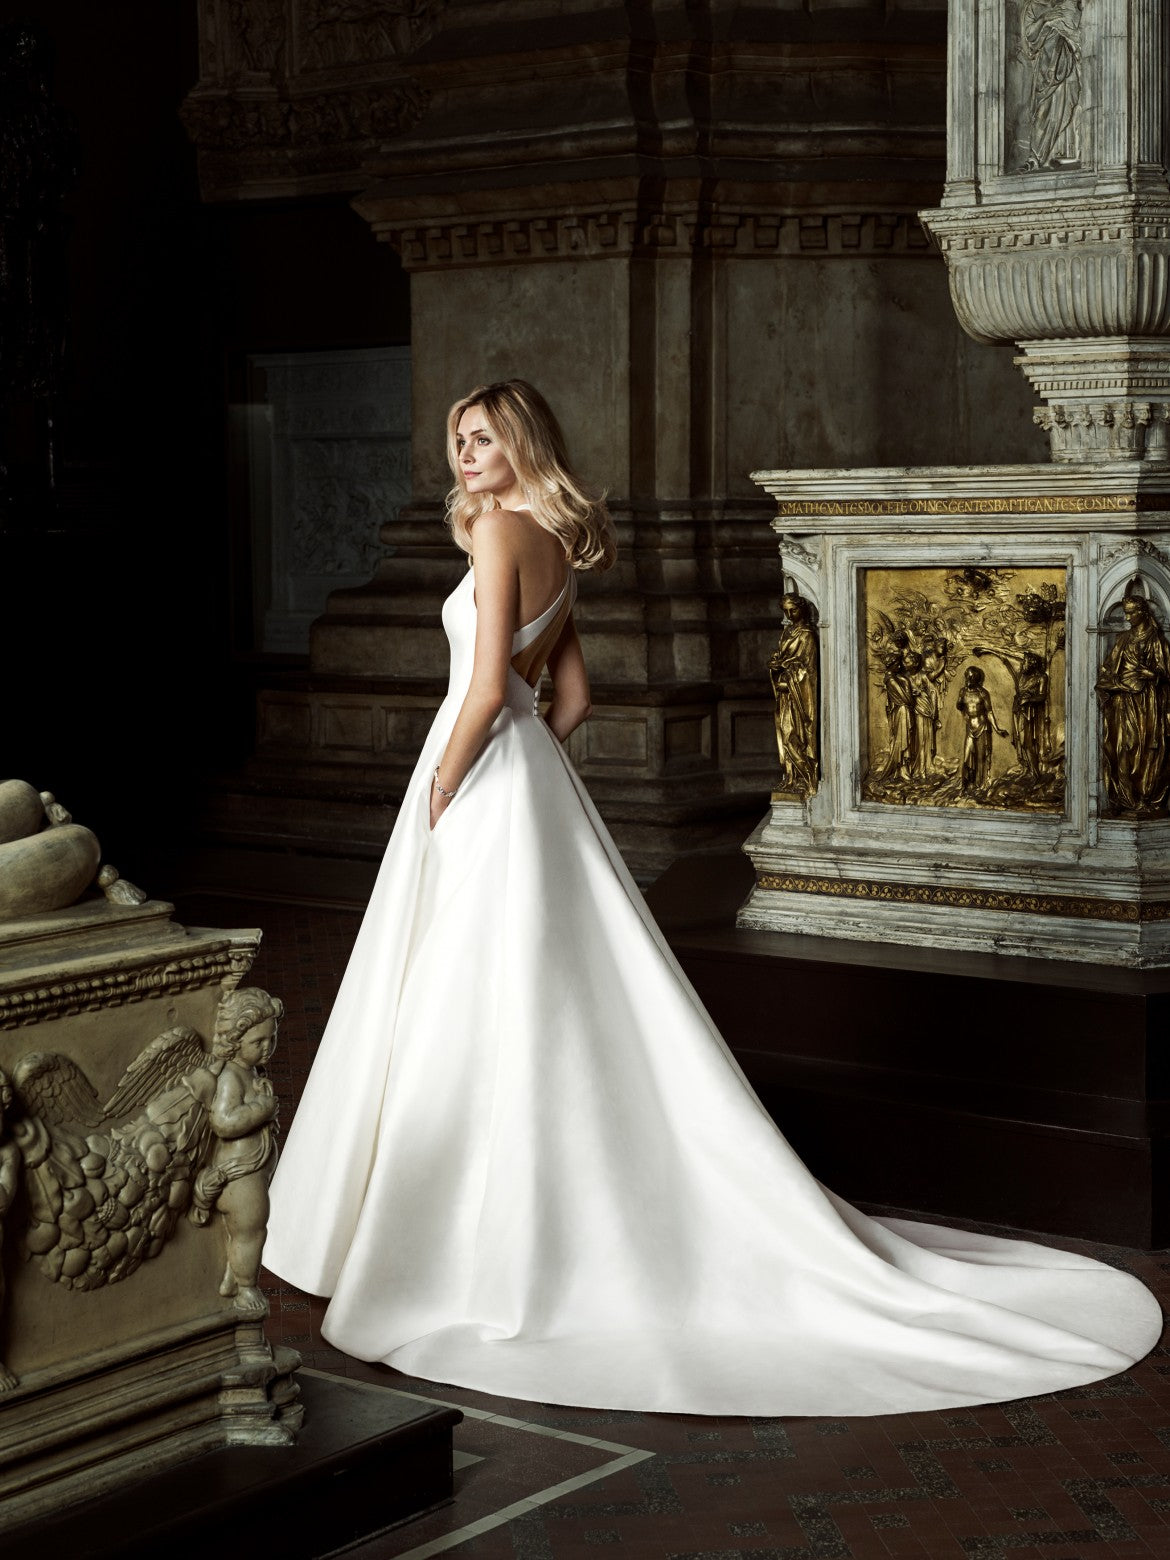 Irresistable designer wedding gown by Caroline Castigliano